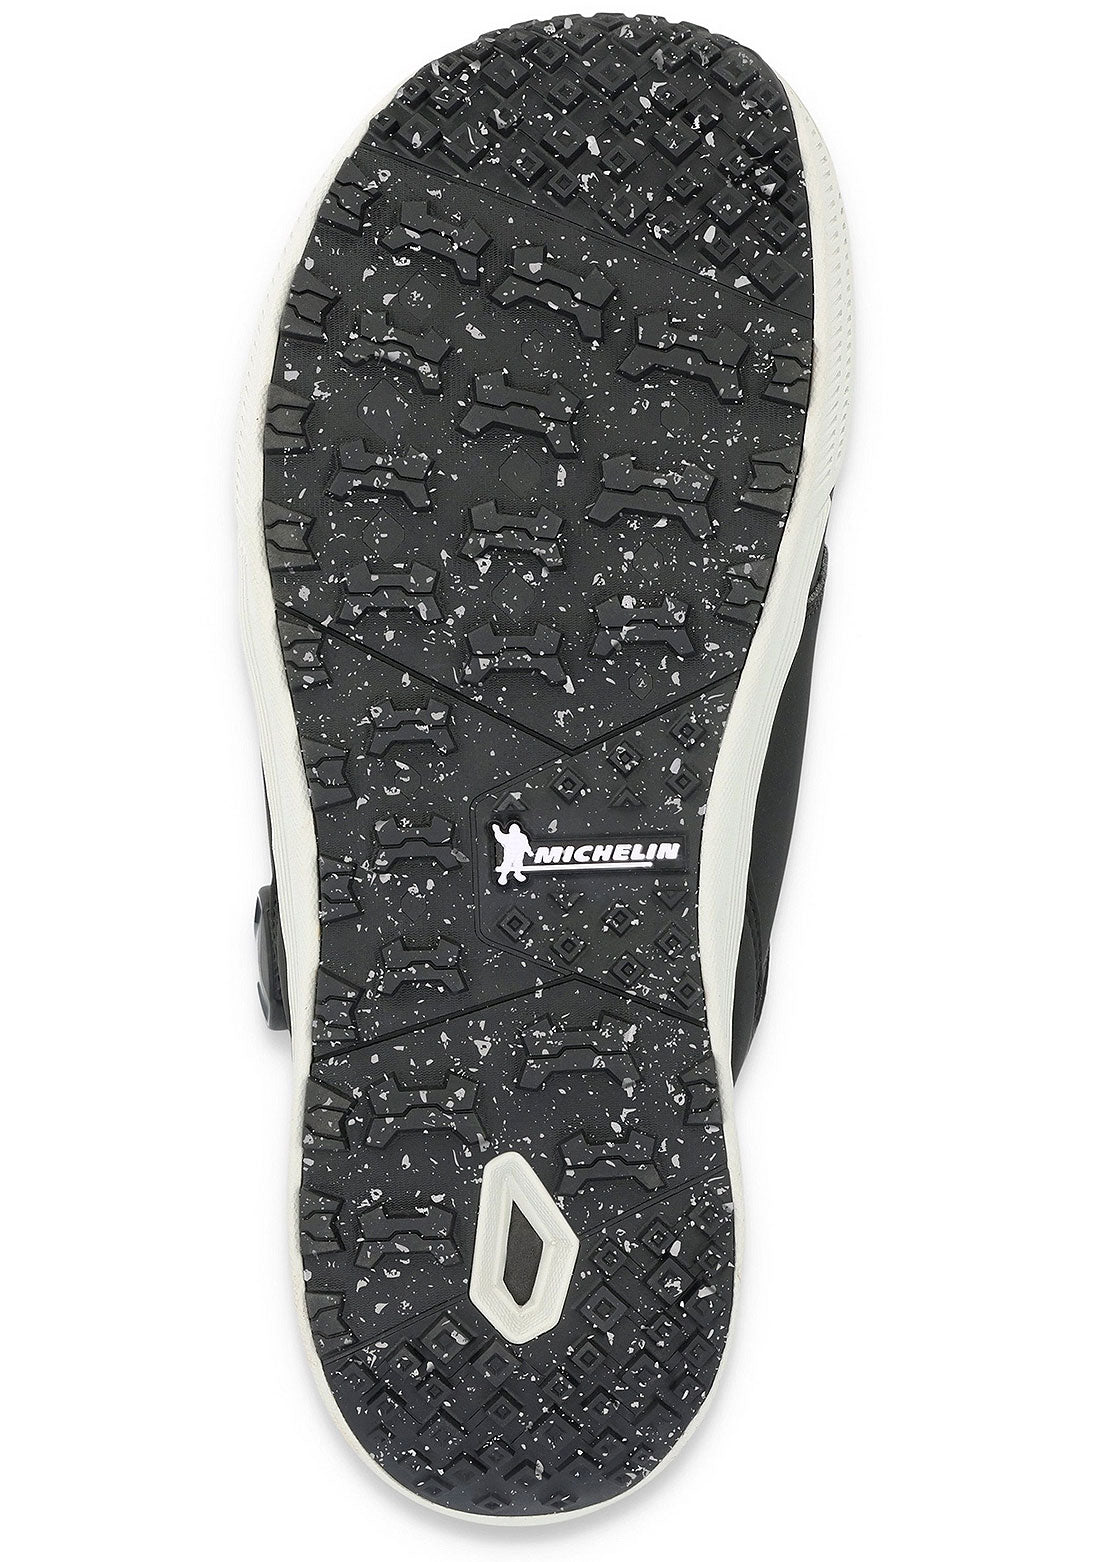 Ride Men&#39;s Lasso Pro Wide Snowboard Boots Black